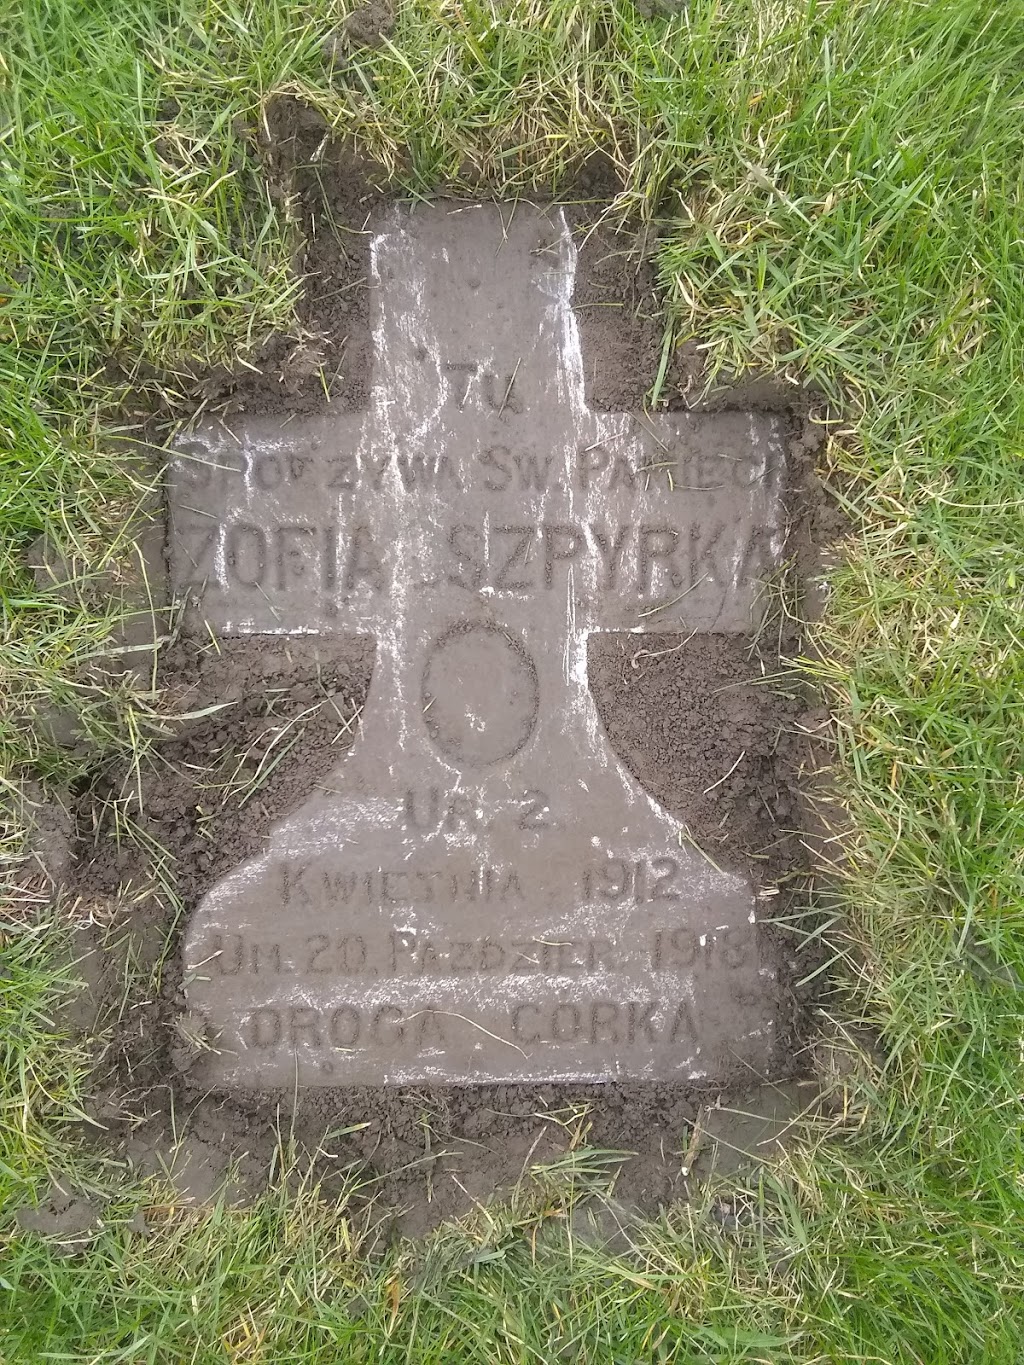 Holy Cross Cemetery | Detroit, MI 48209, USA | Phone: (313) 841-0545